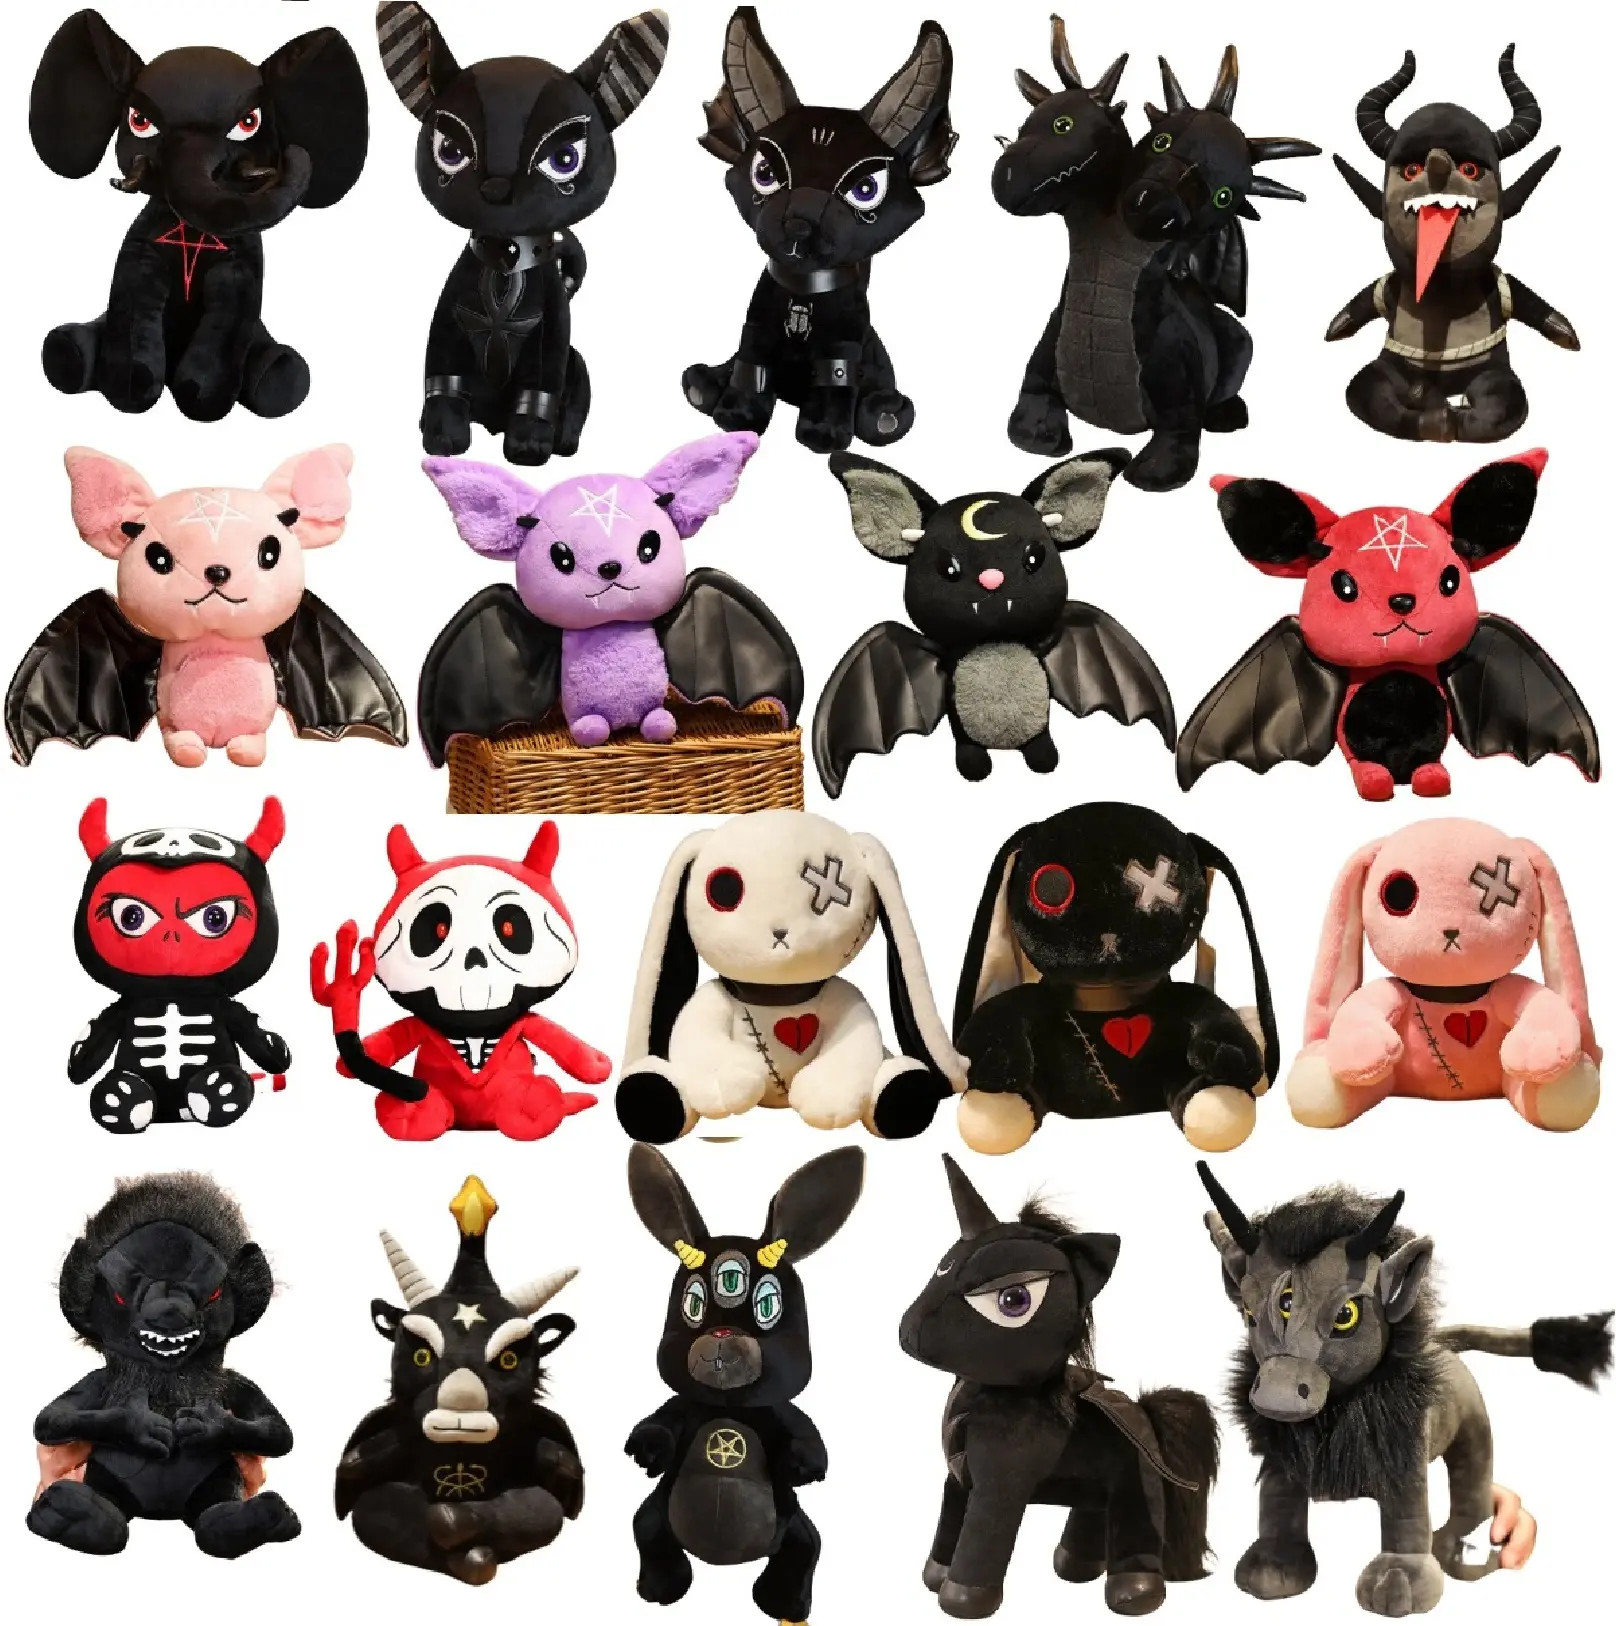 New Dark series fashion plush toy animal Dark Wind doll creative Halloween gift